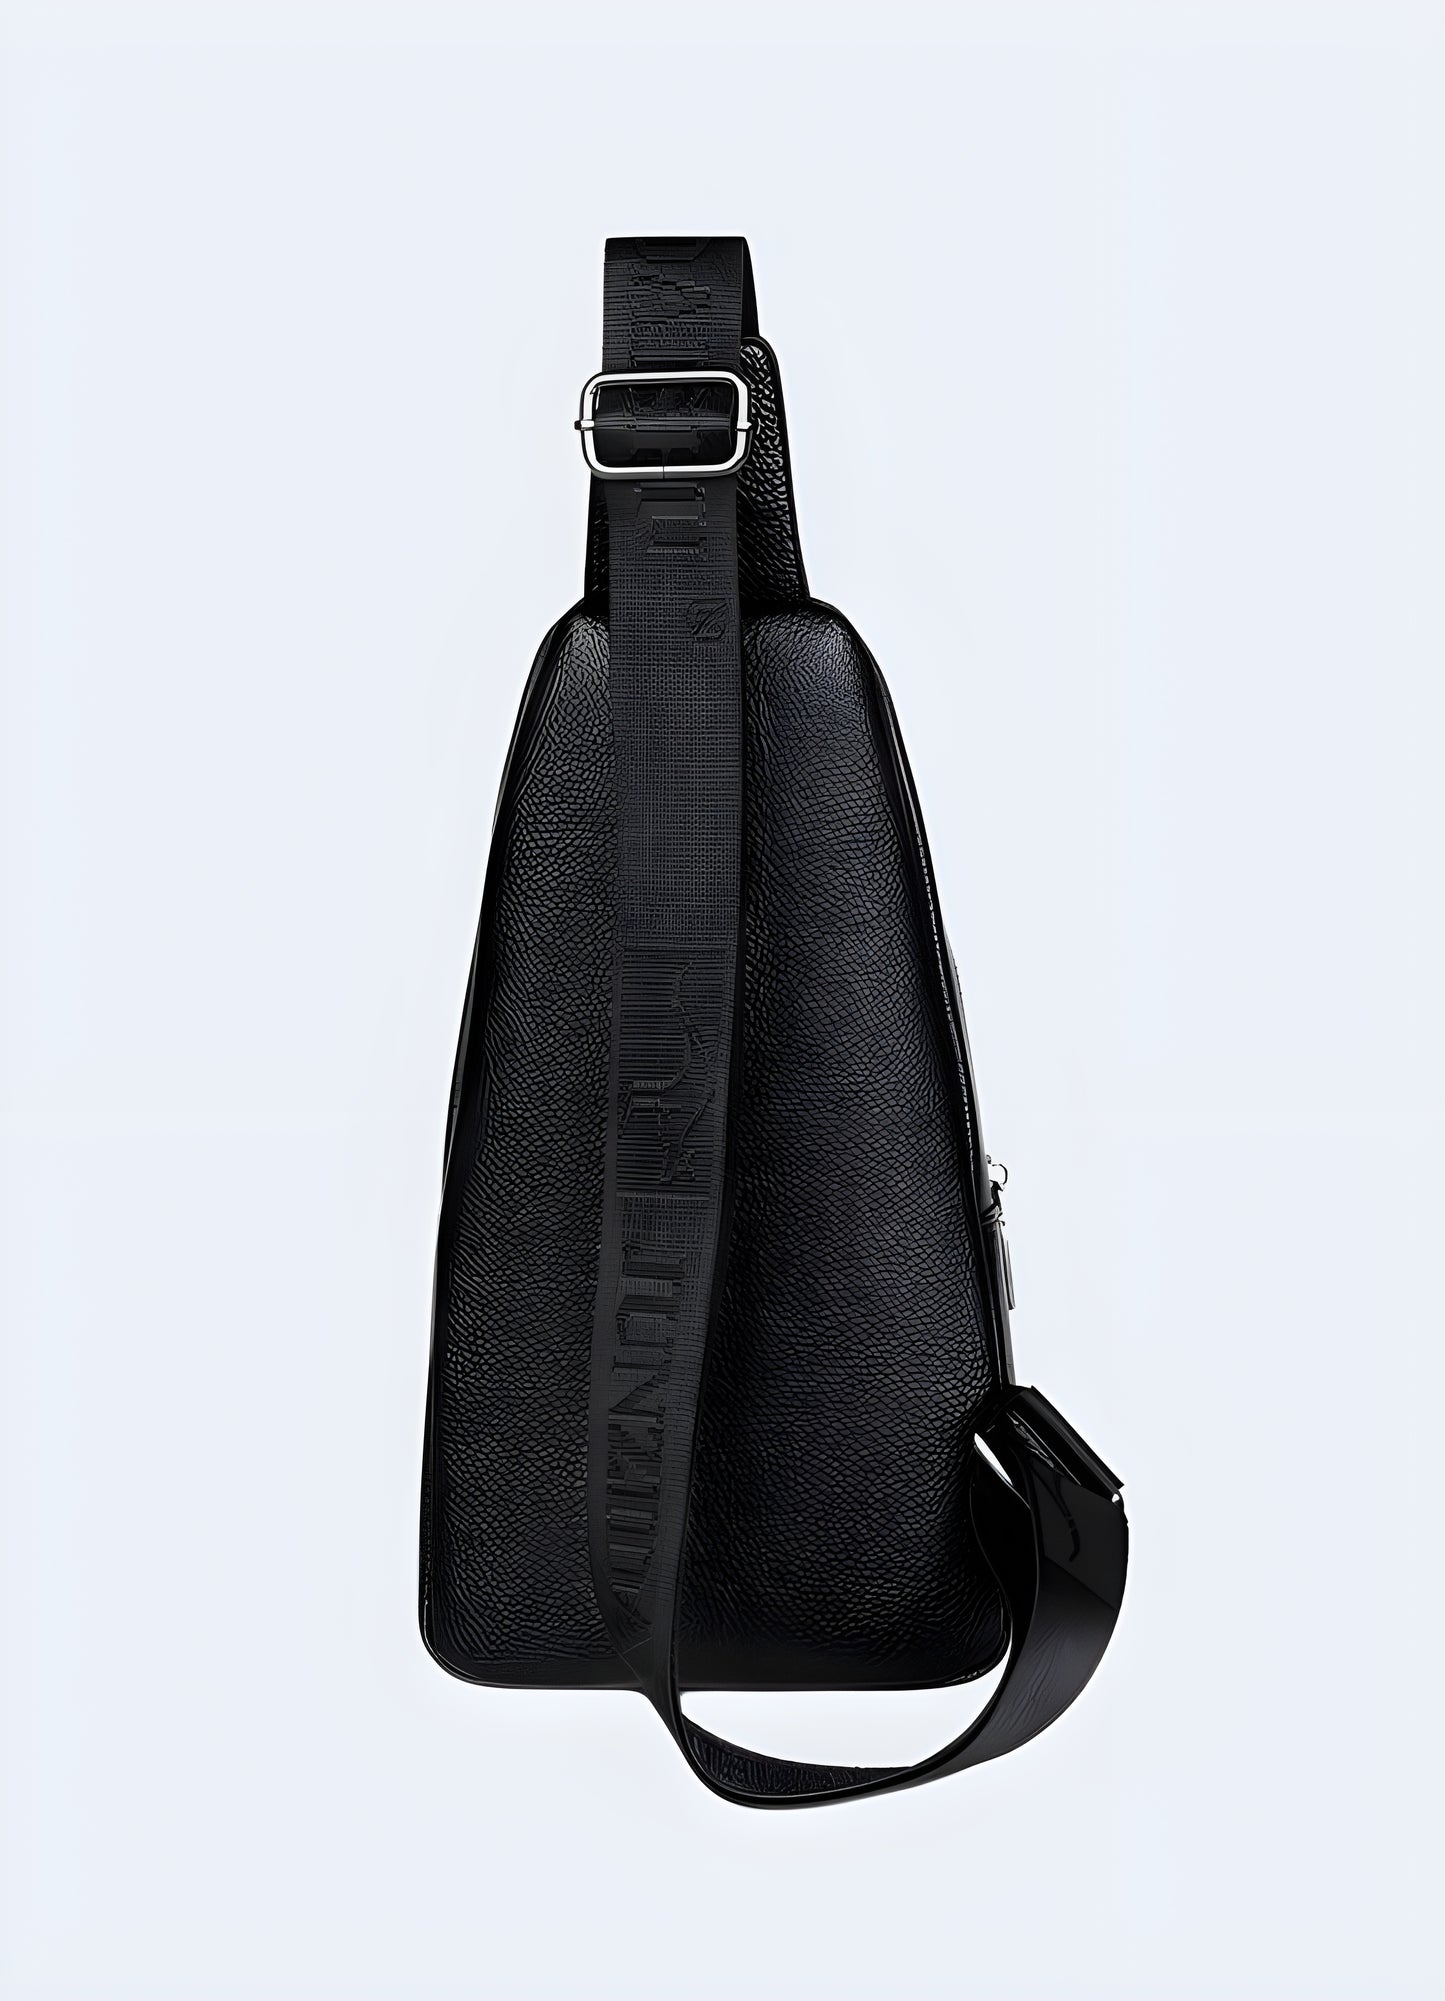 Adjustable strap ensures a comfortable, custom fit. 